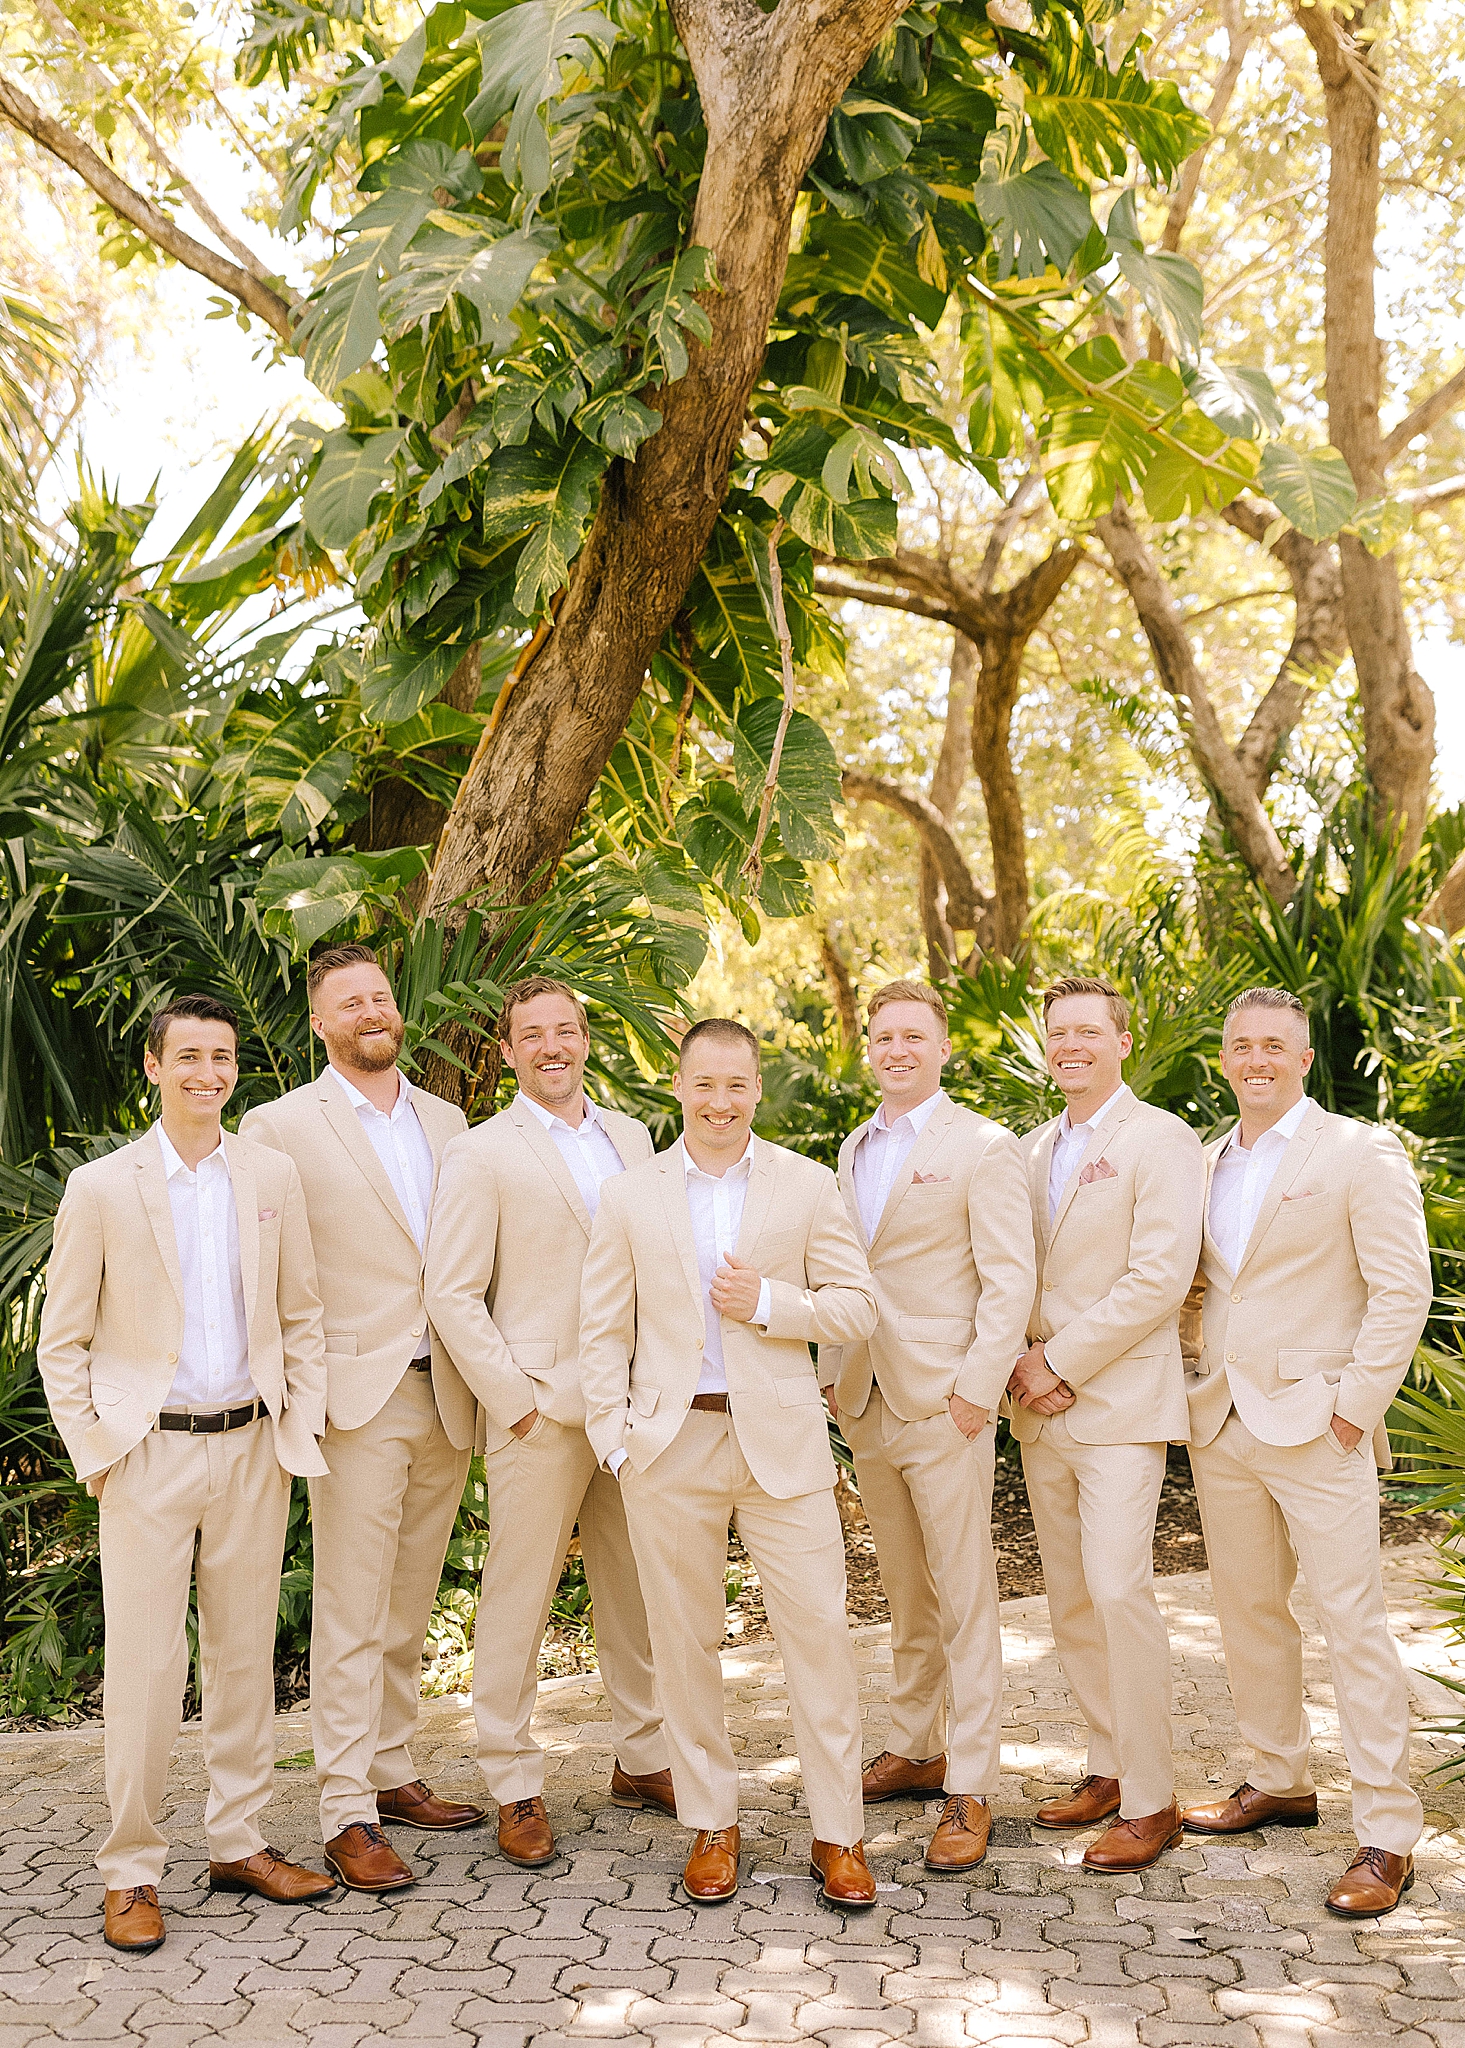 groom poses with groomsmen in tan suits